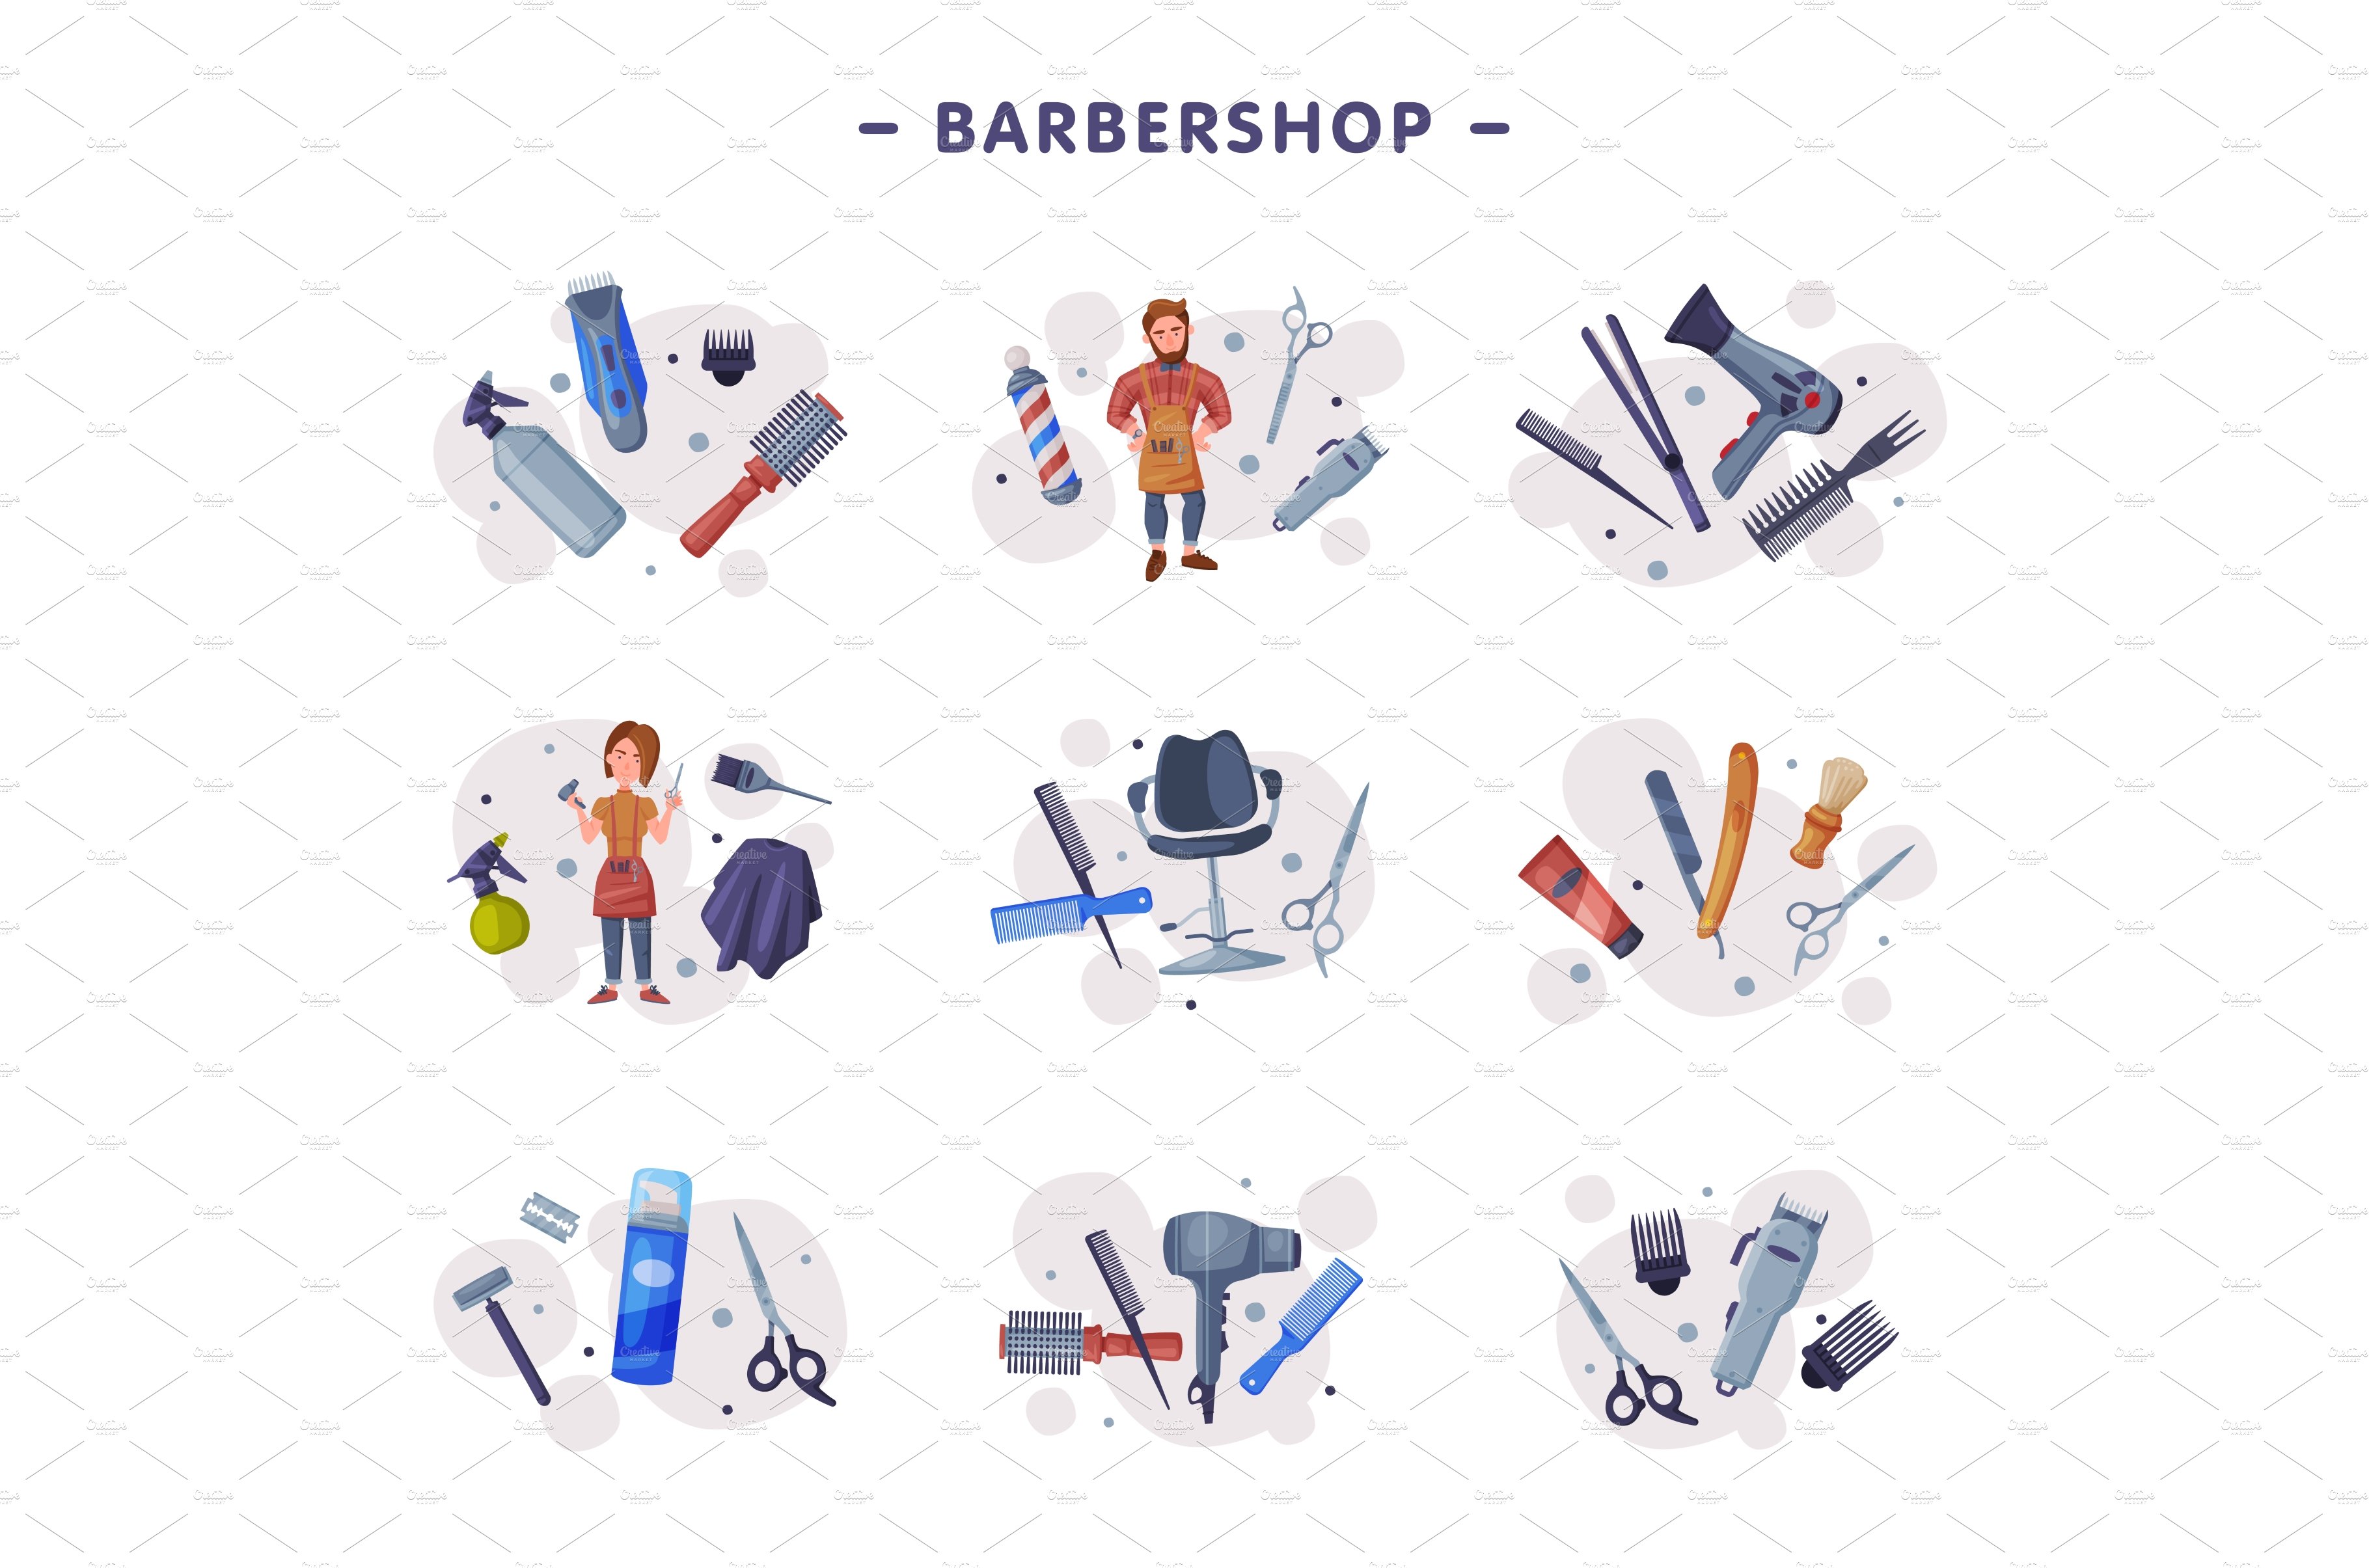 Barbershop Set, Professional cover image.